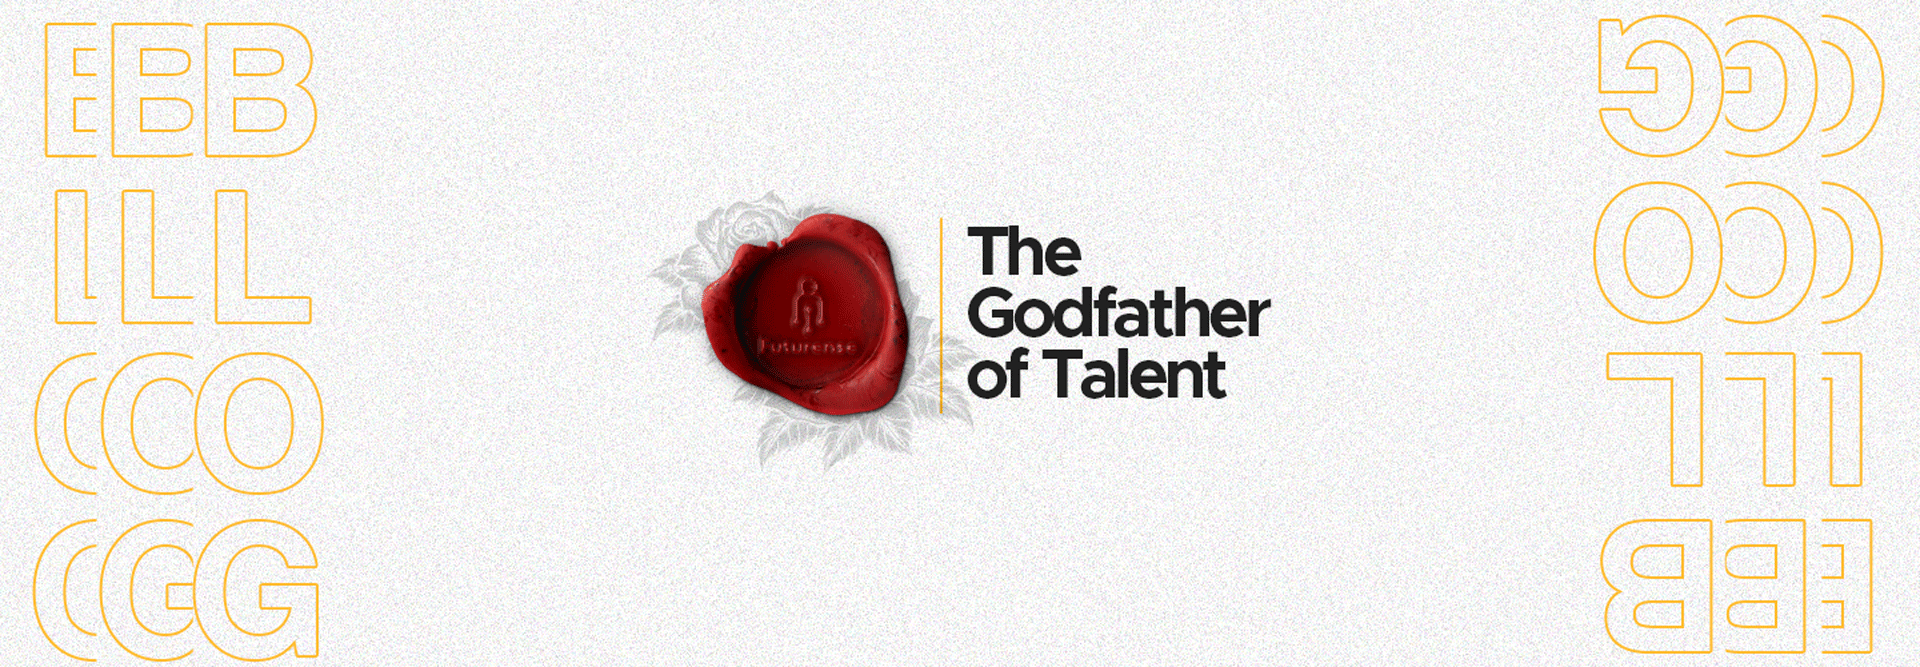 Blogs | Futurense - Godfather of Talent